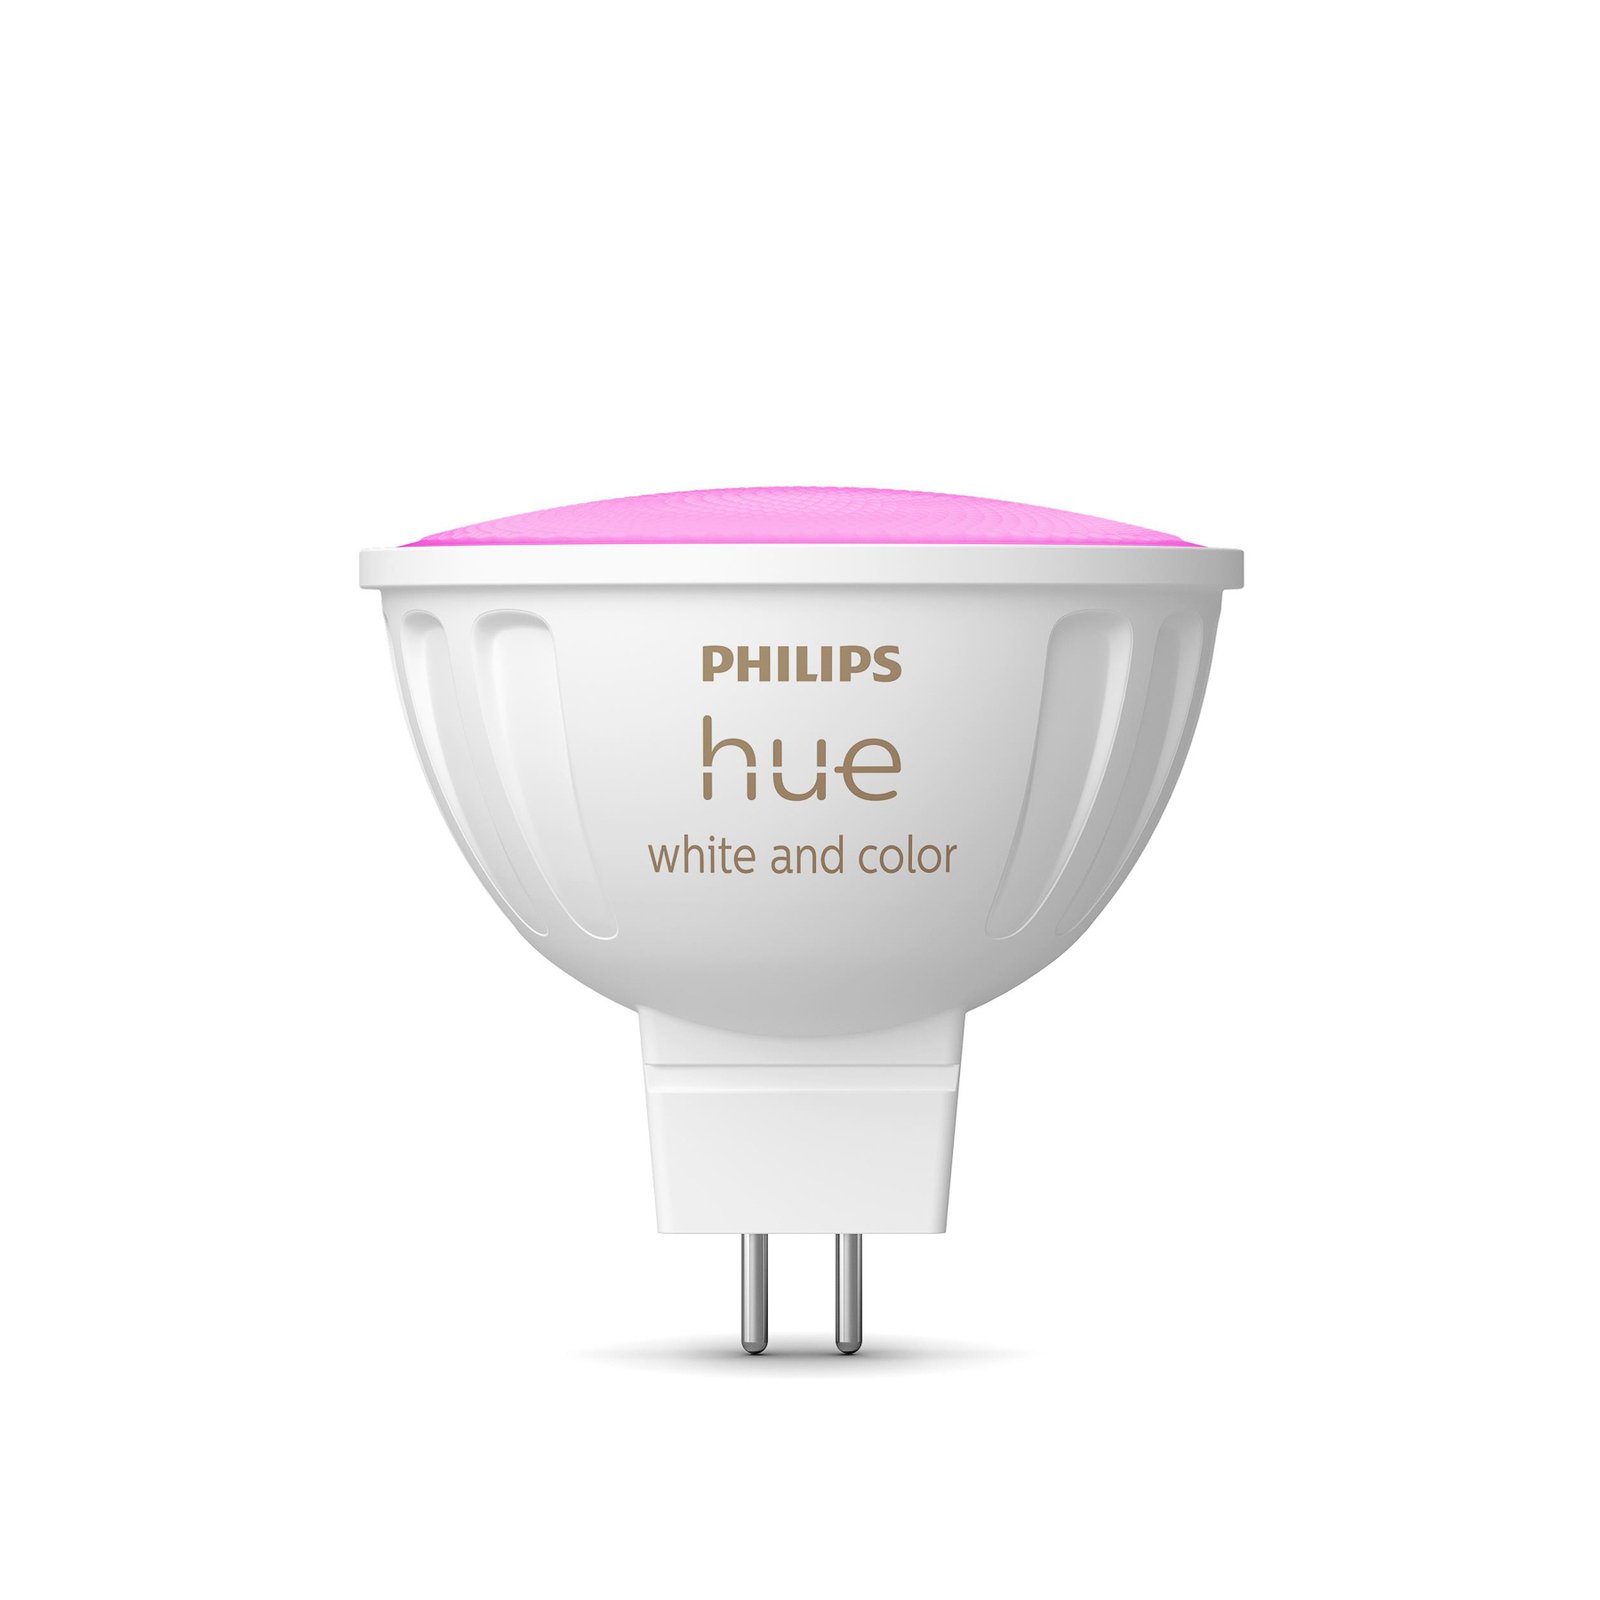 "Philips Hue White & Colour Ambiance LED" 6,3 W GU5.3